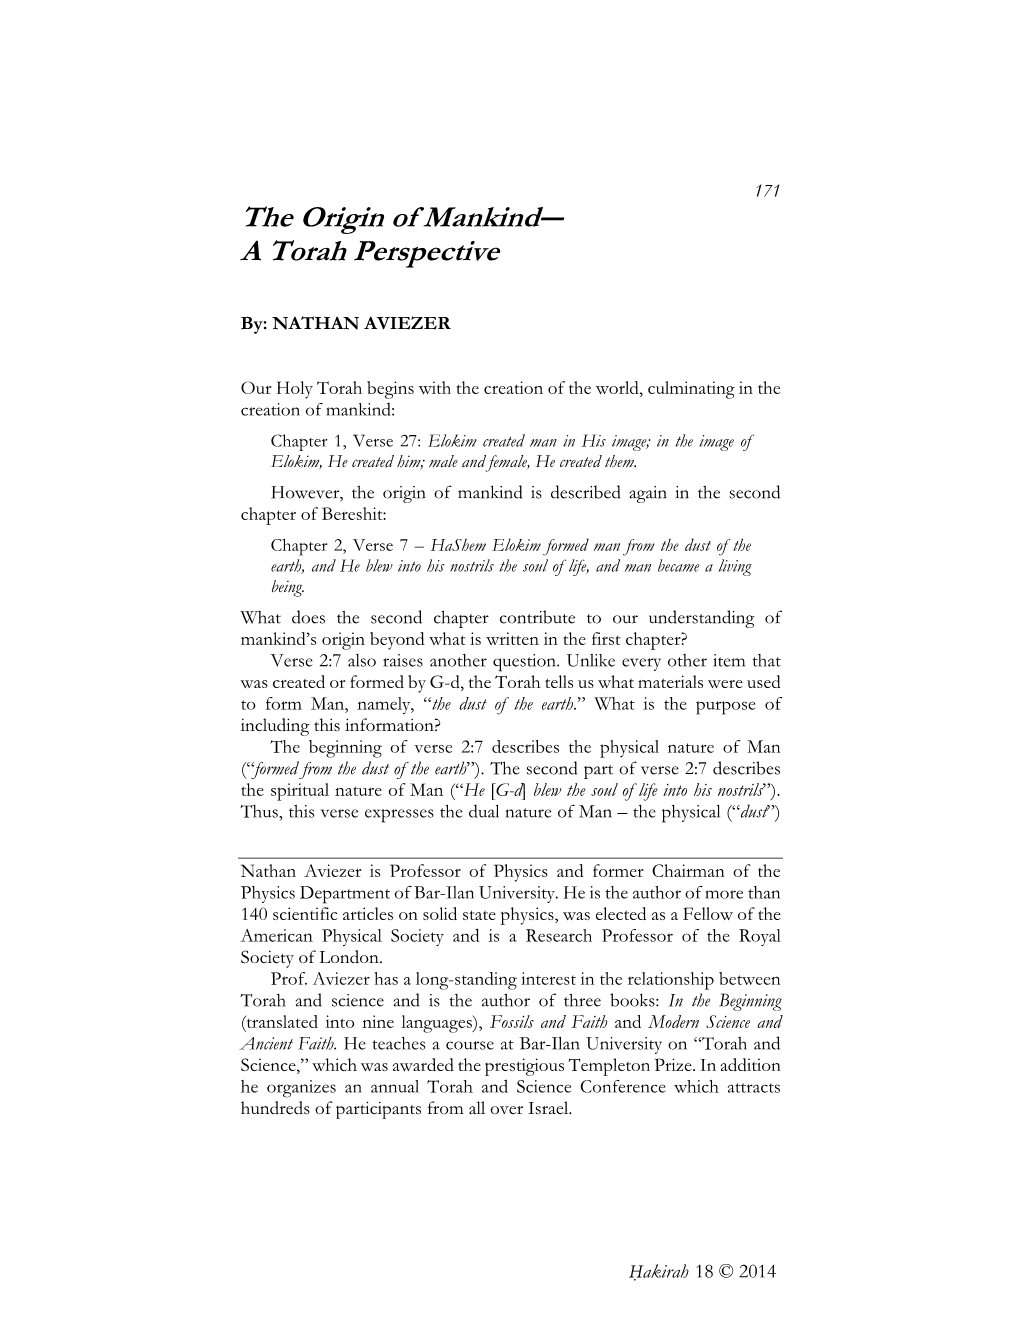 The Origin of Mankind― a Torah Perspective